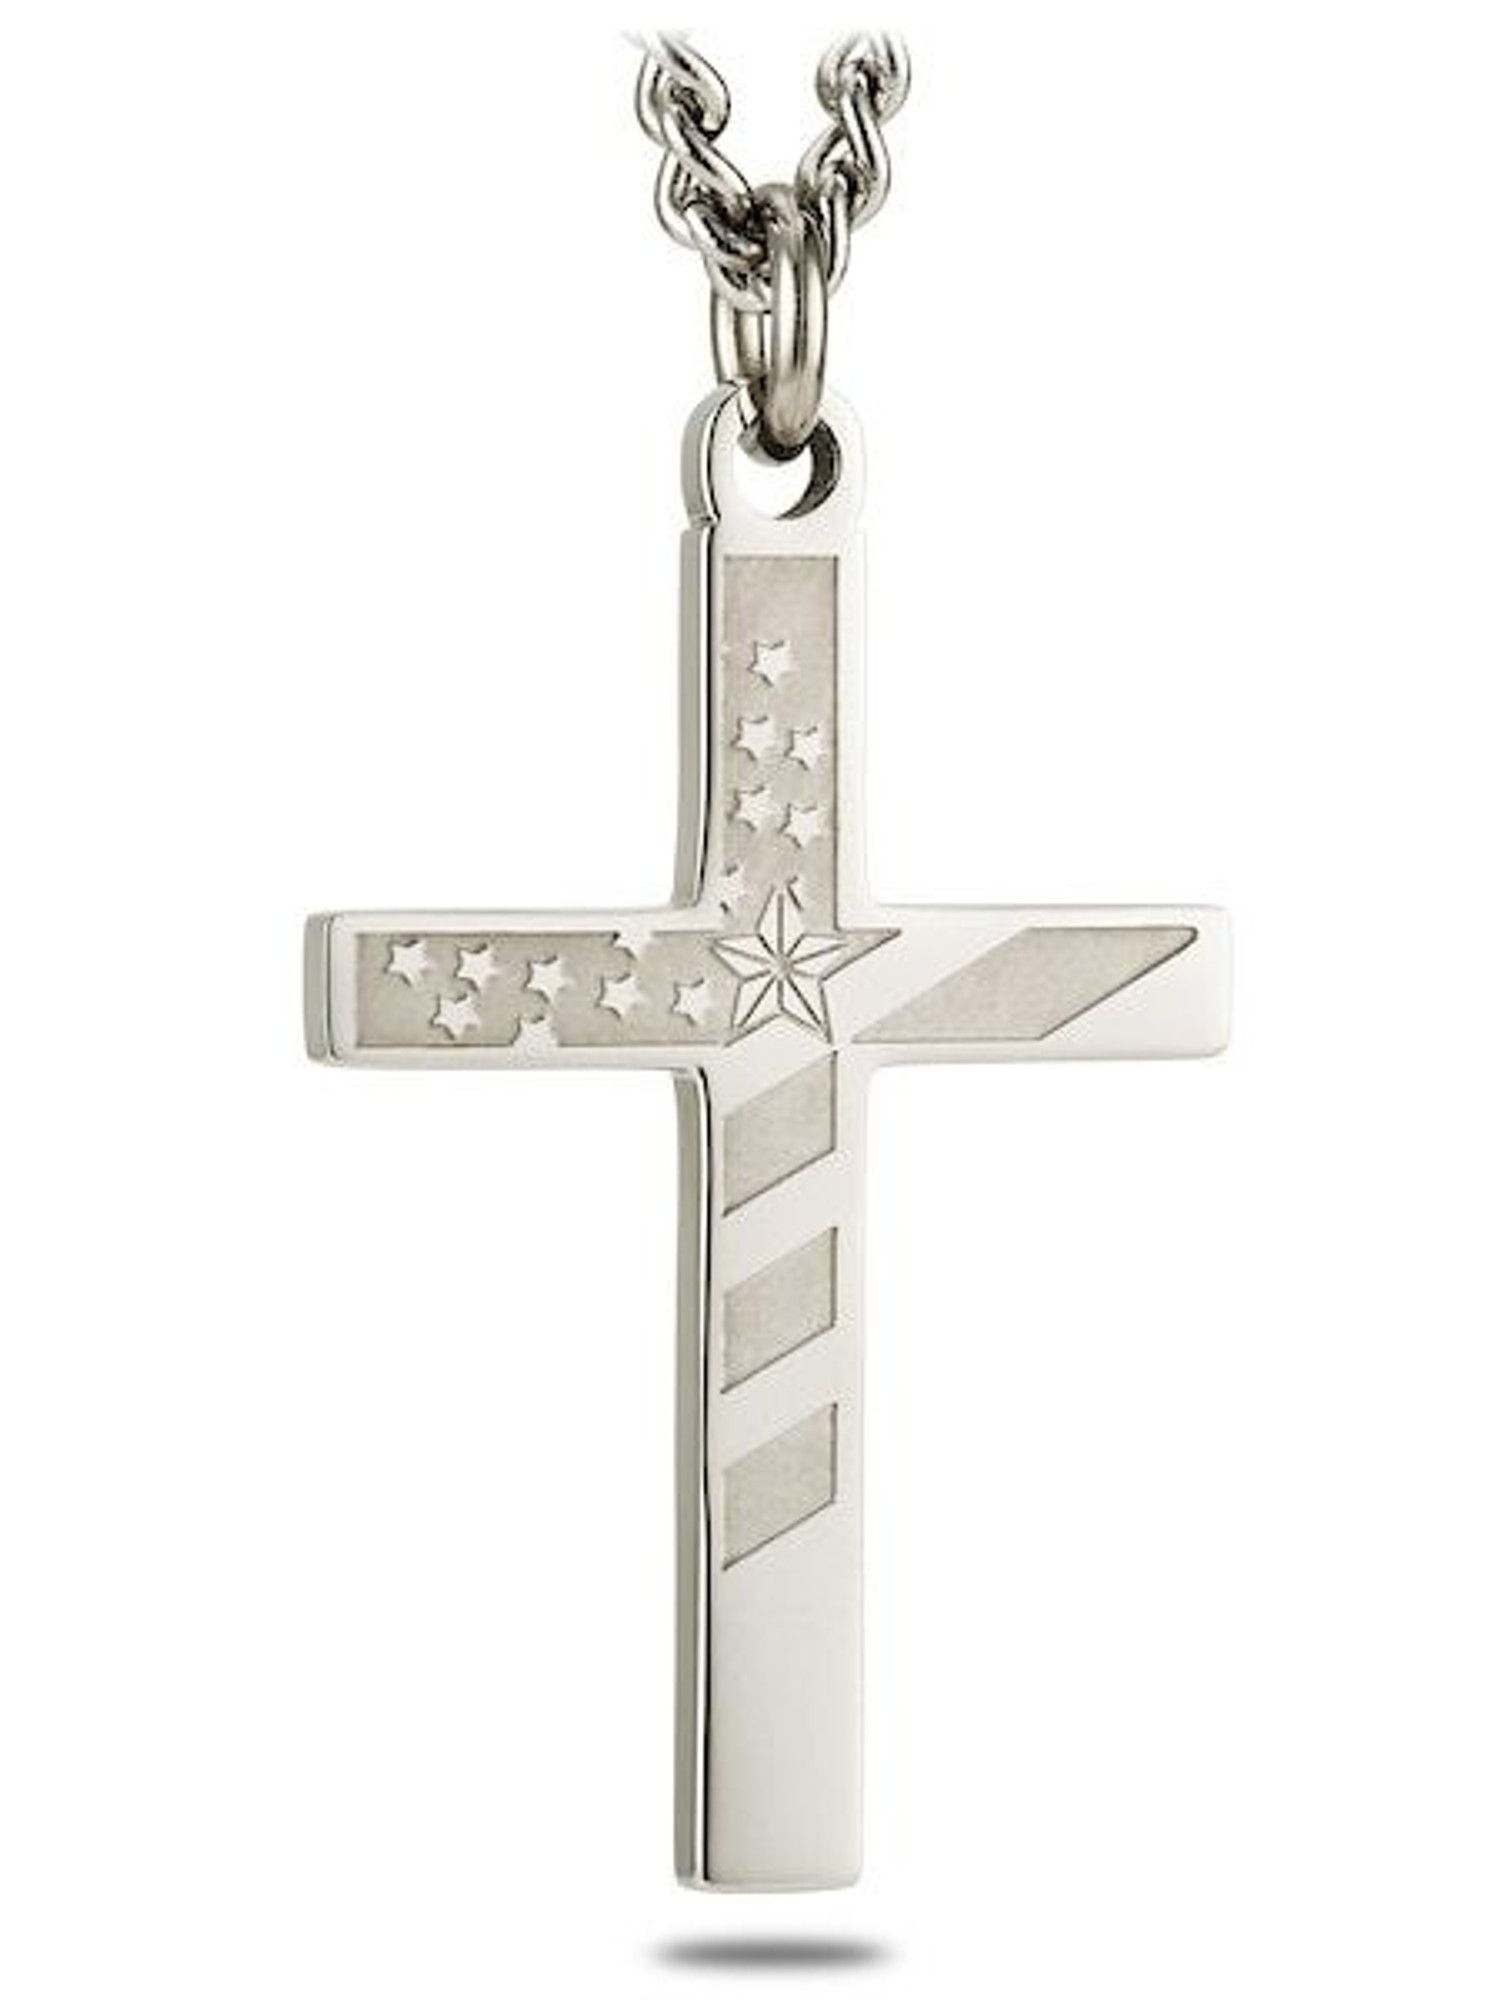 Cross Necklace Men, Cross Necklace, Crucifix Necklace, Mens Cross